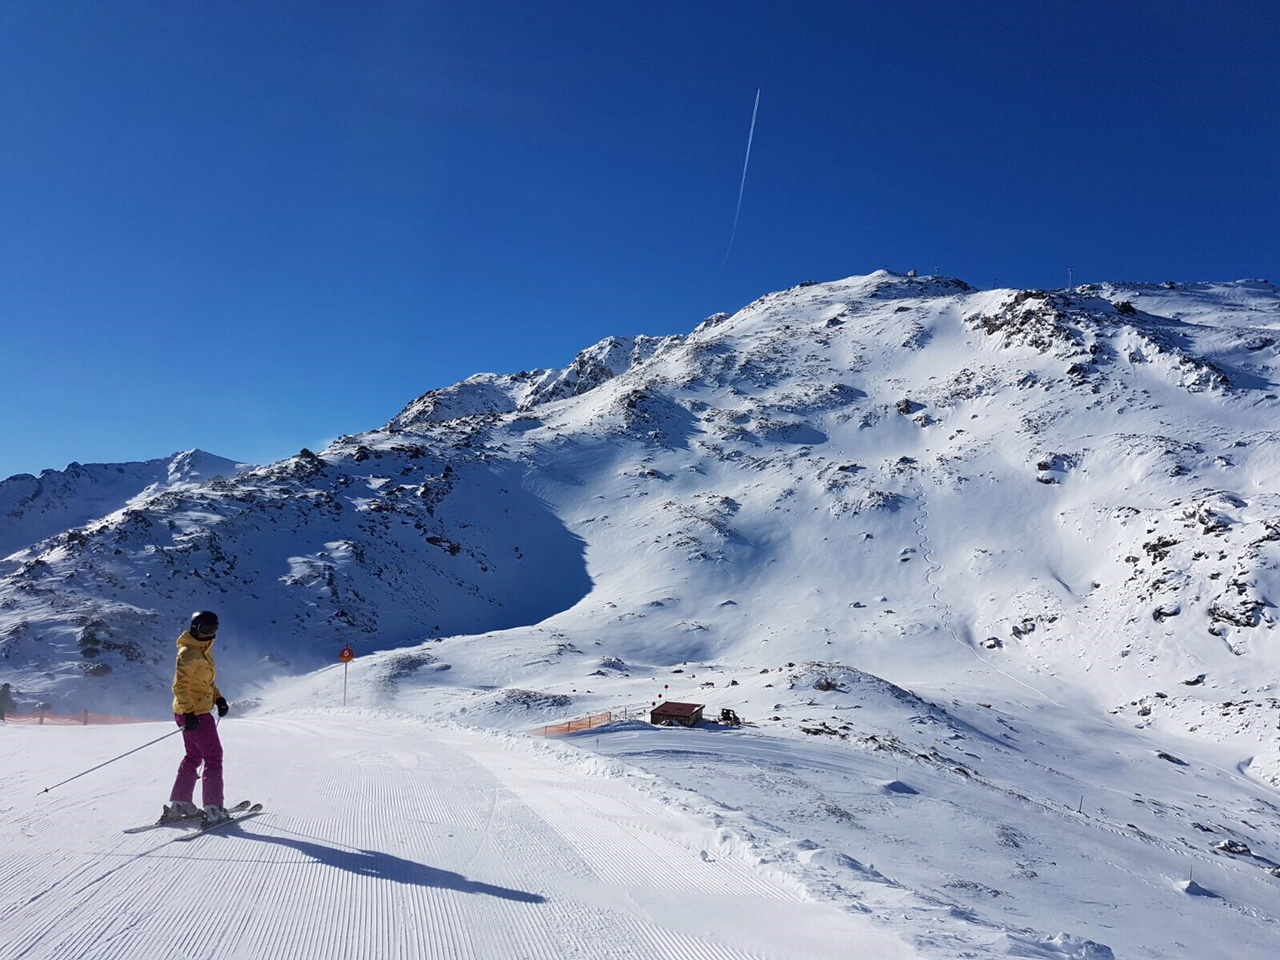 Get skiing …. on Mount Glungezer!